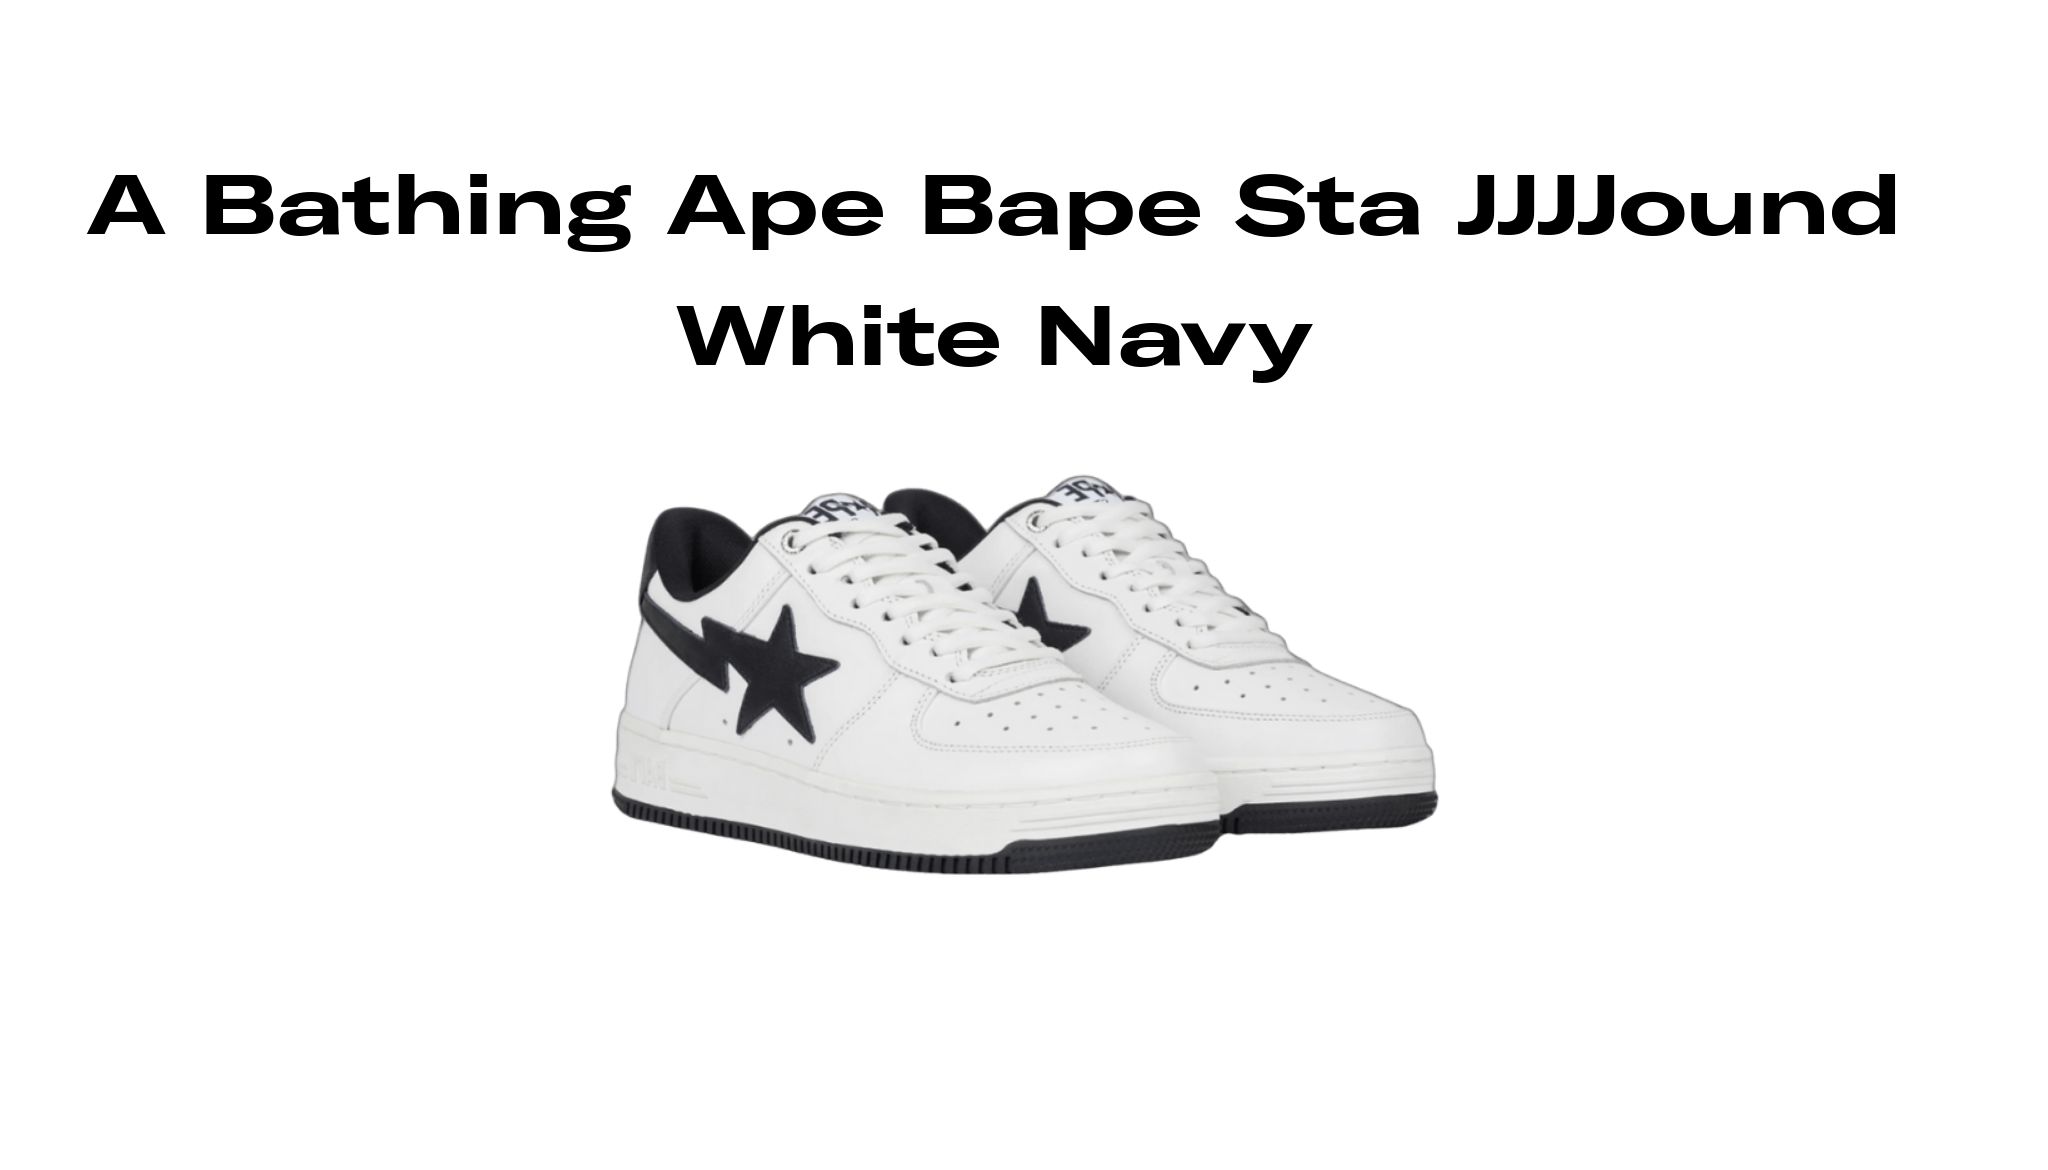 A Bathing Ape Bape Sta JJJJound White Navy Release Date, Raffles